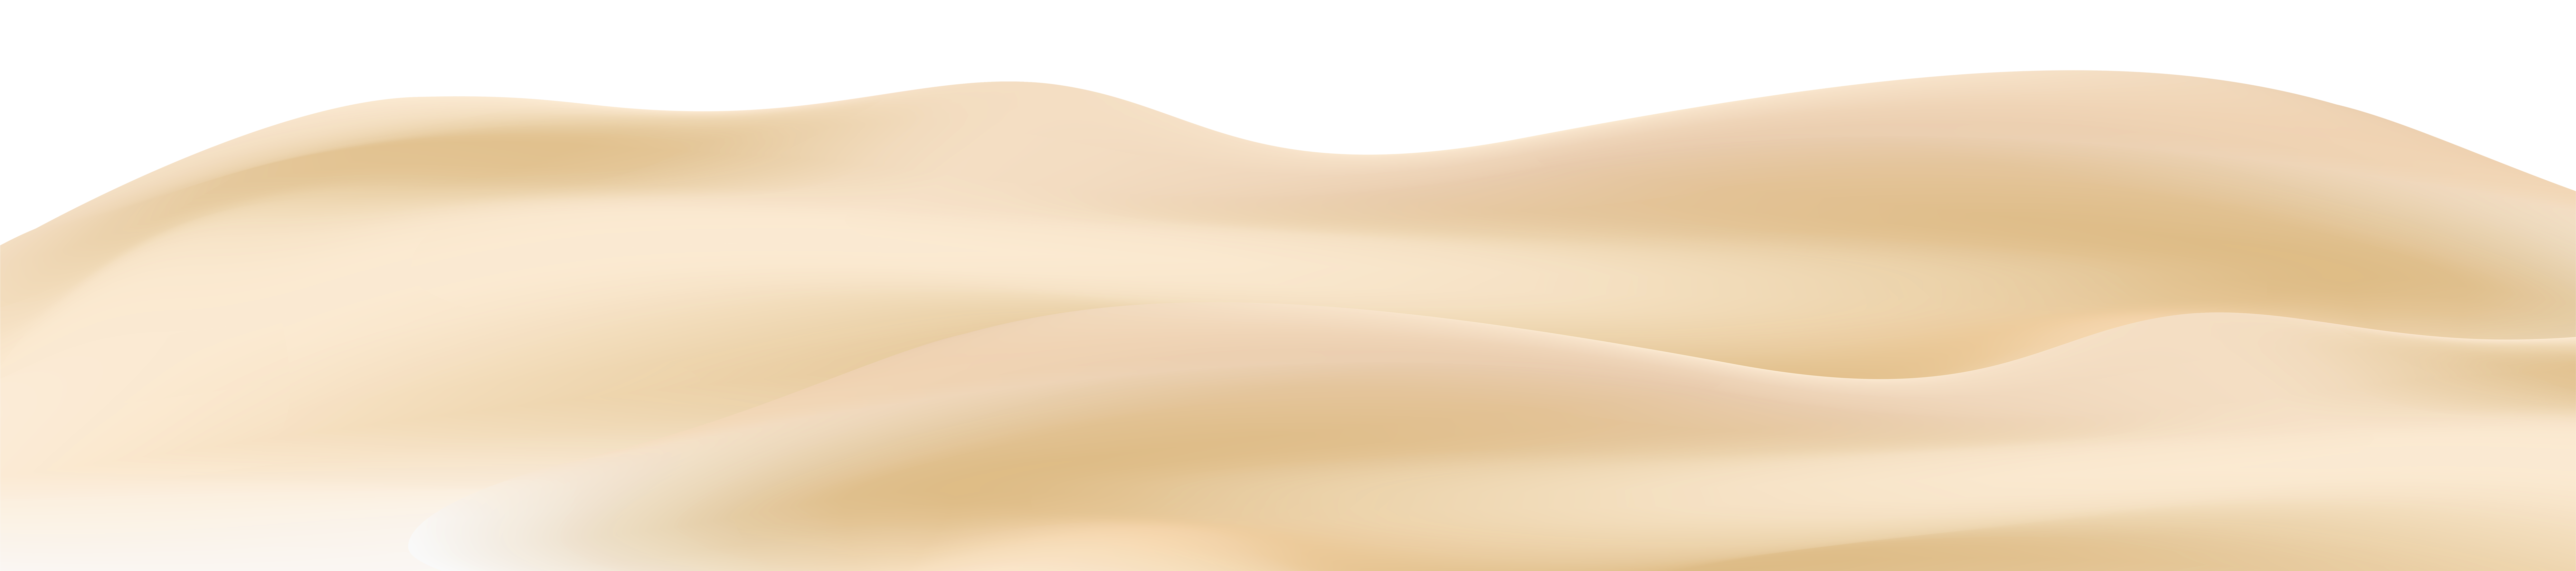 Sand Texture. Vector